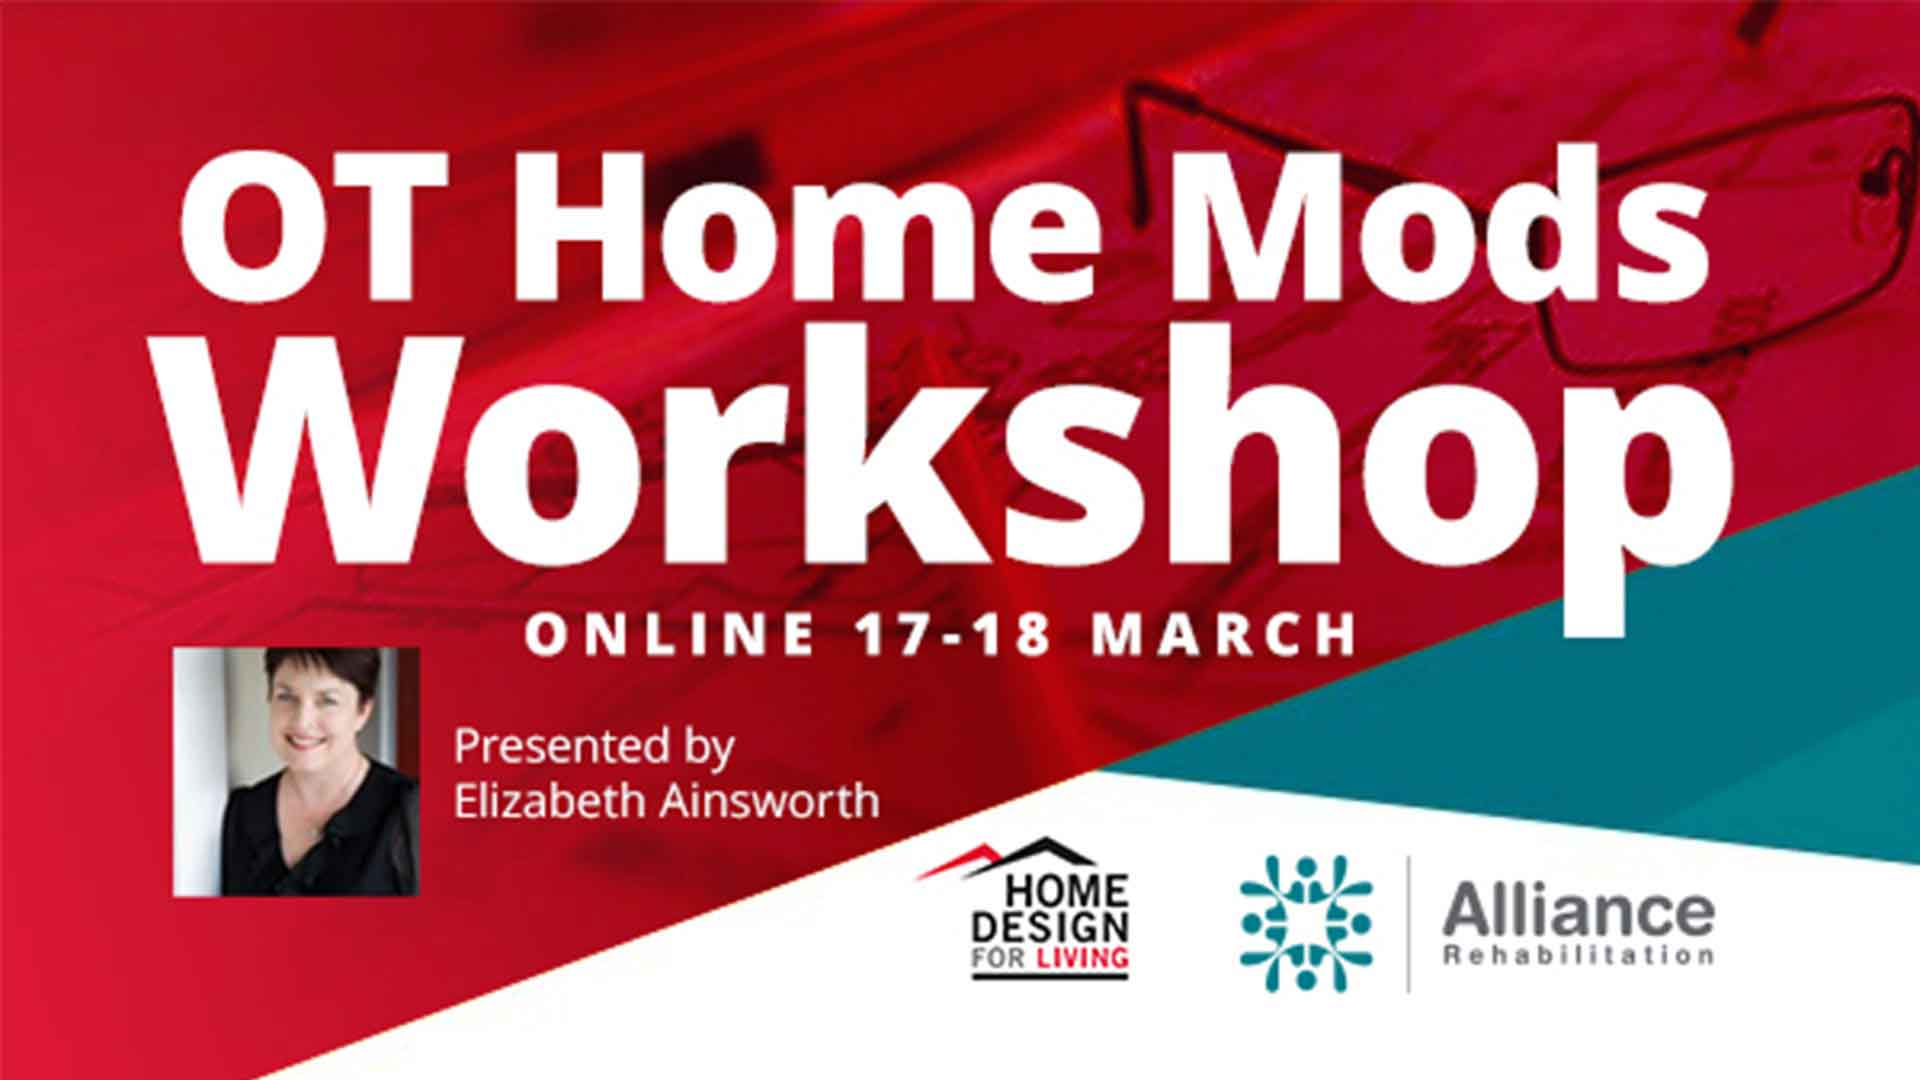 OT Home Mods Workshop presented by Elizabeth Ainsworth